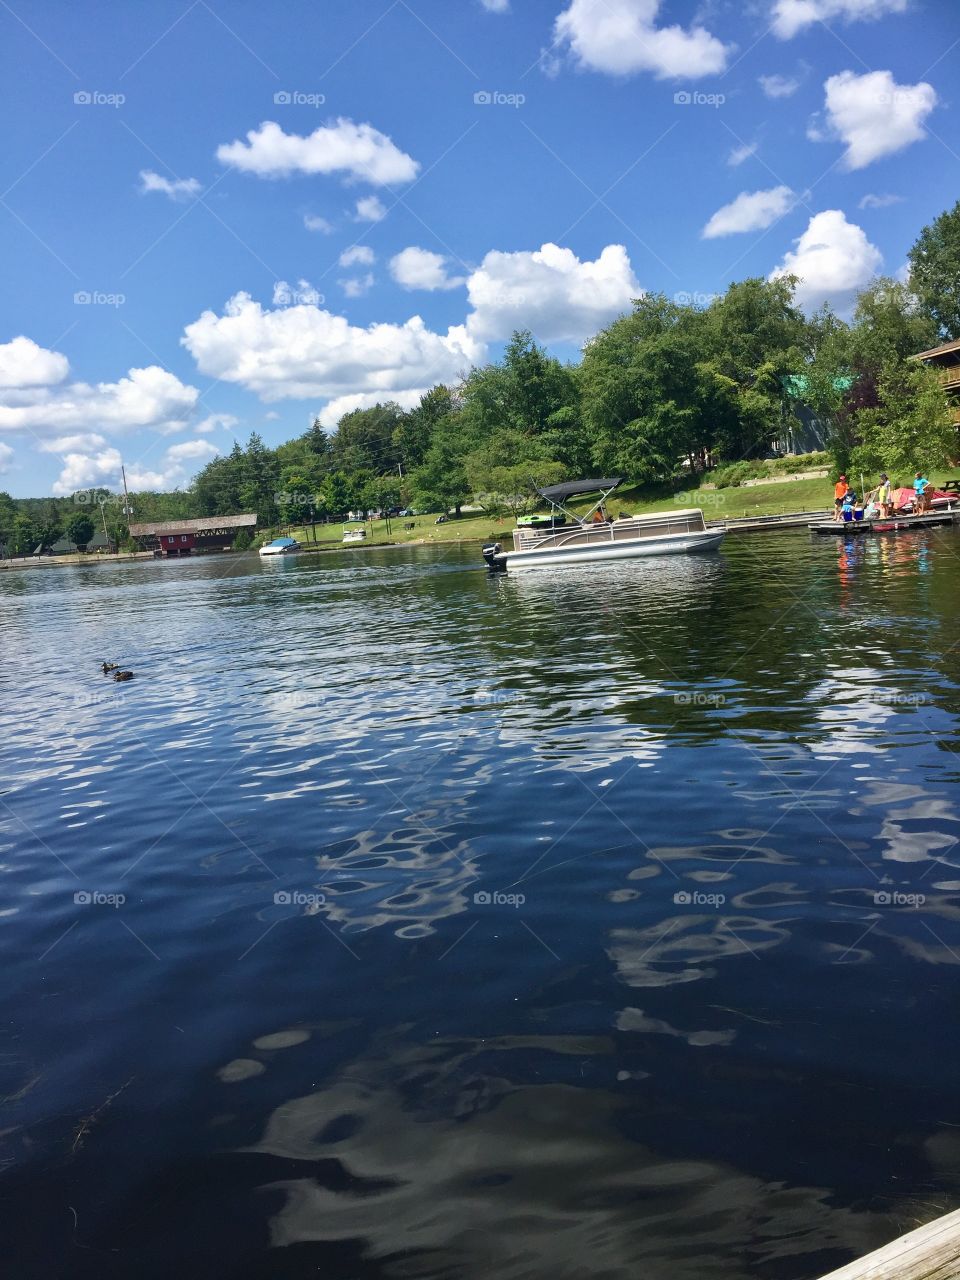 A beautiful summer day on lake